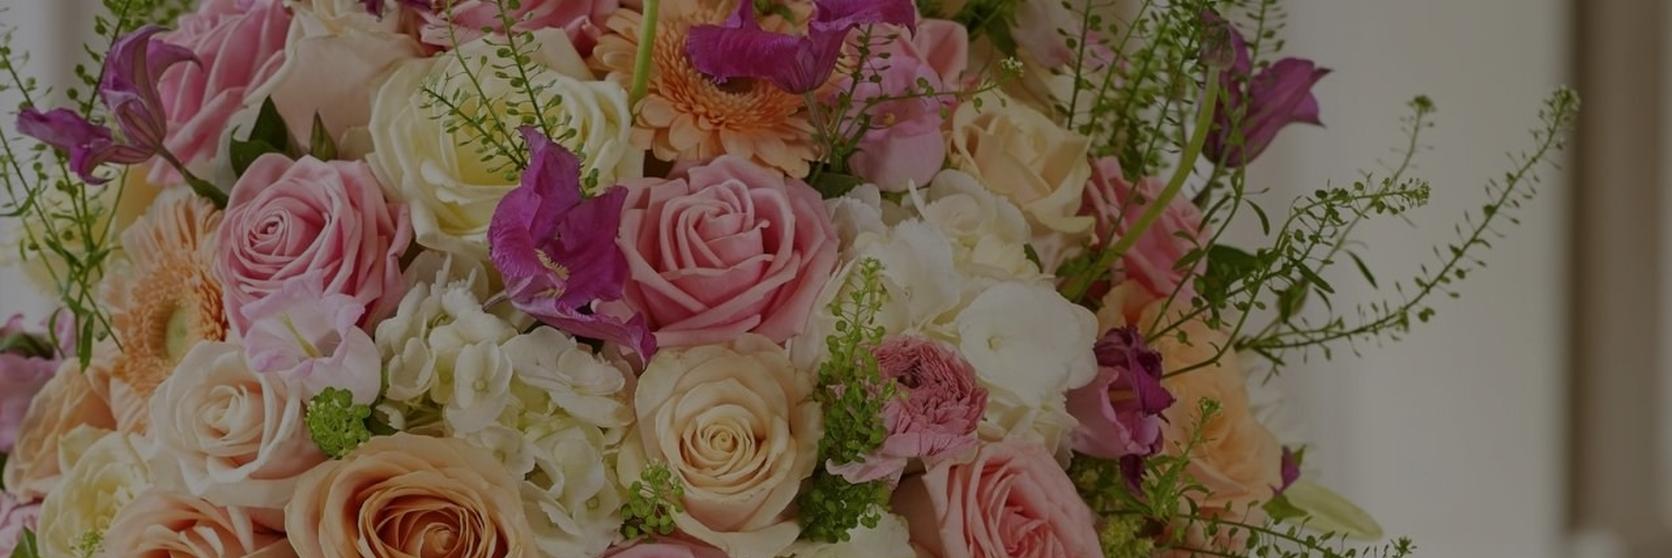 pastel-wedding-flowers-roses-bouquet